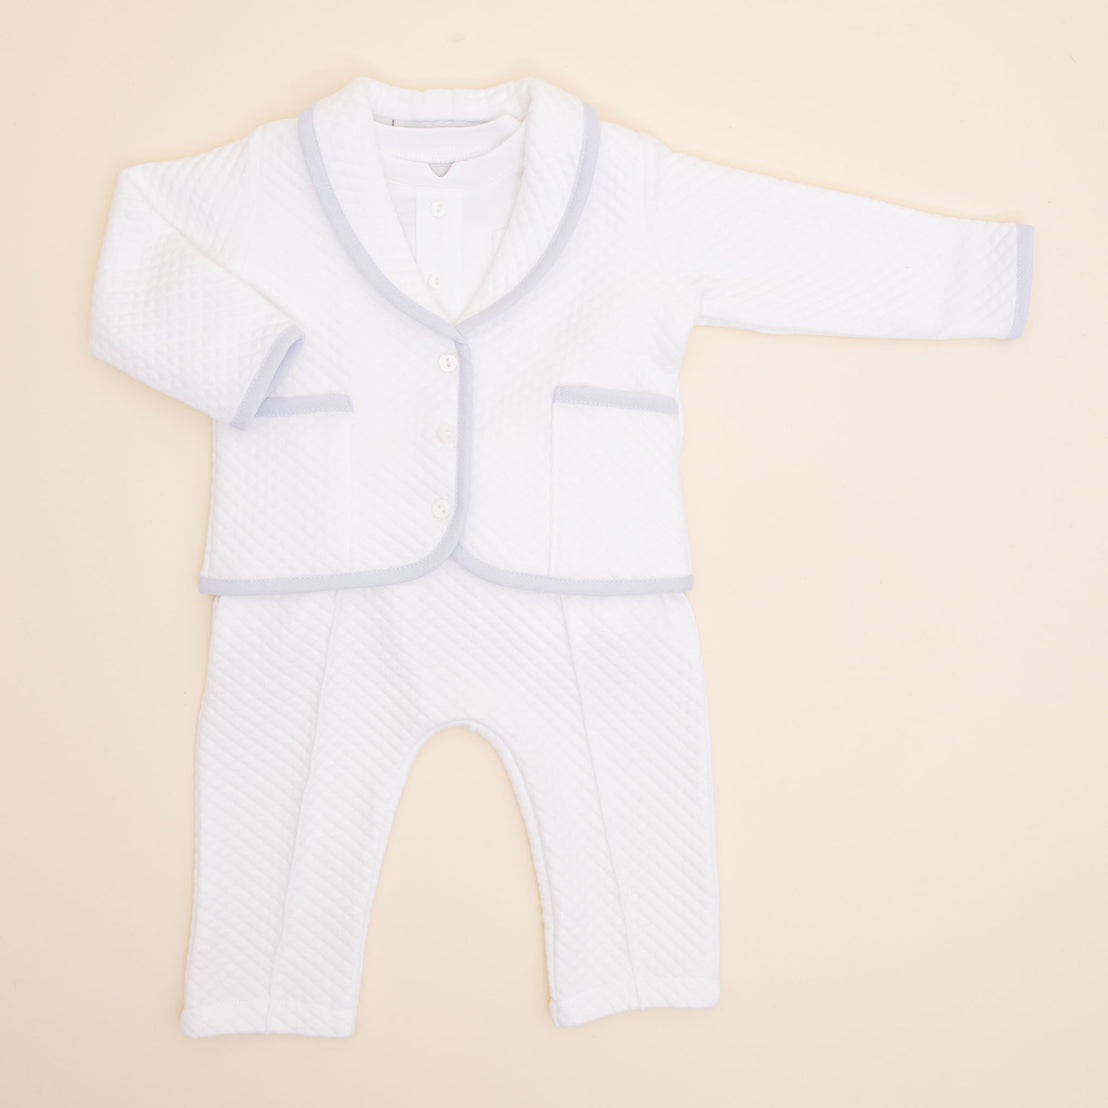 Harrison Quilted Newborn Suit